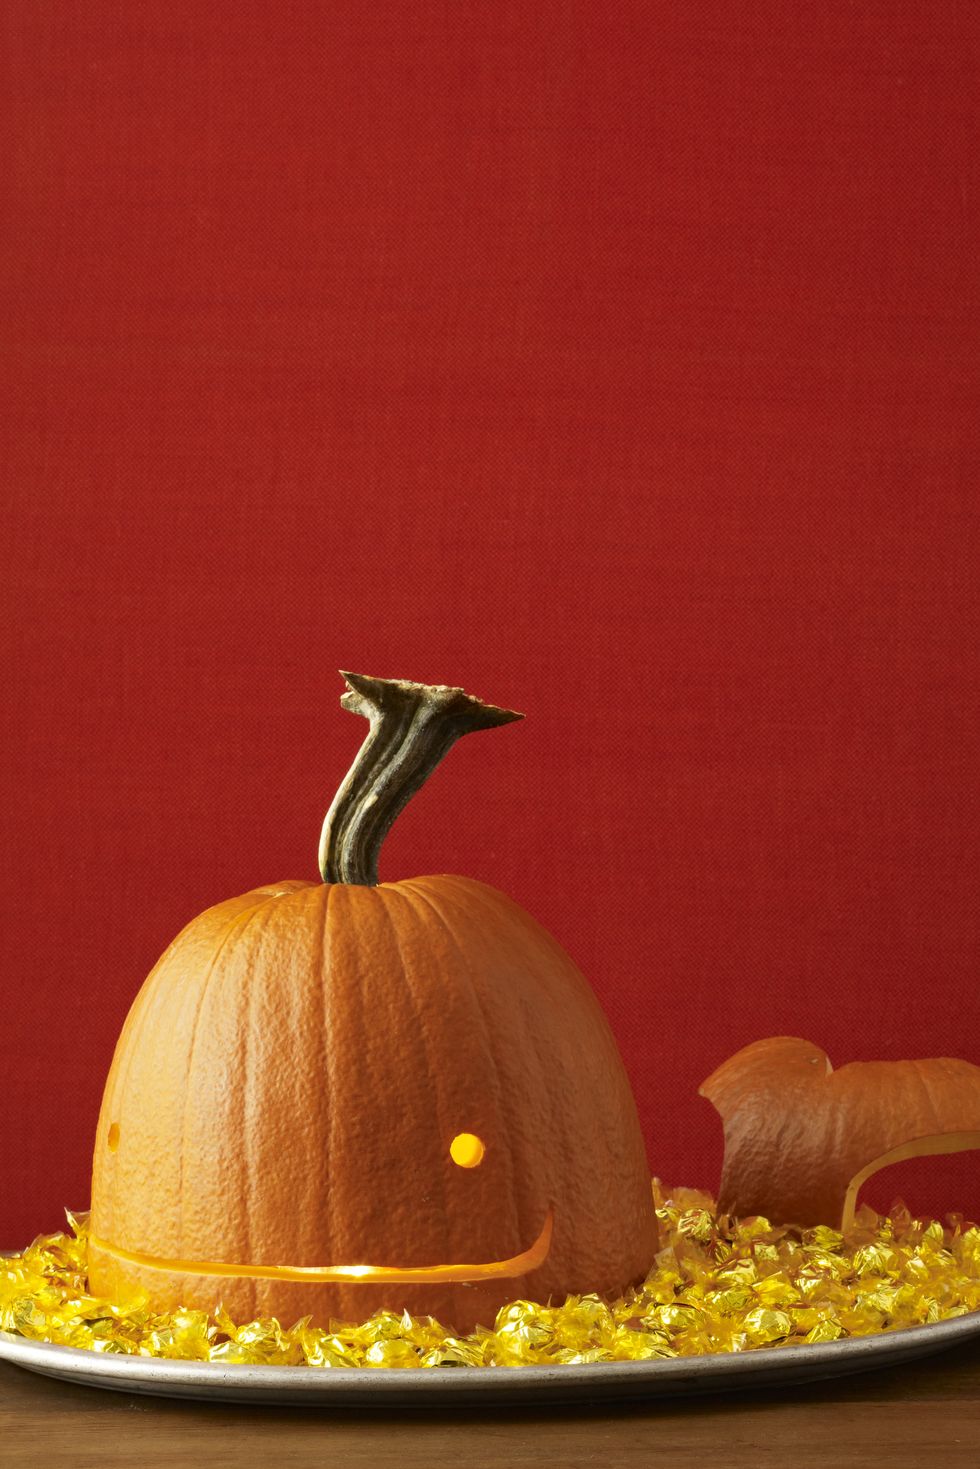 pumpkin carving ideas whale of a time pumpkin